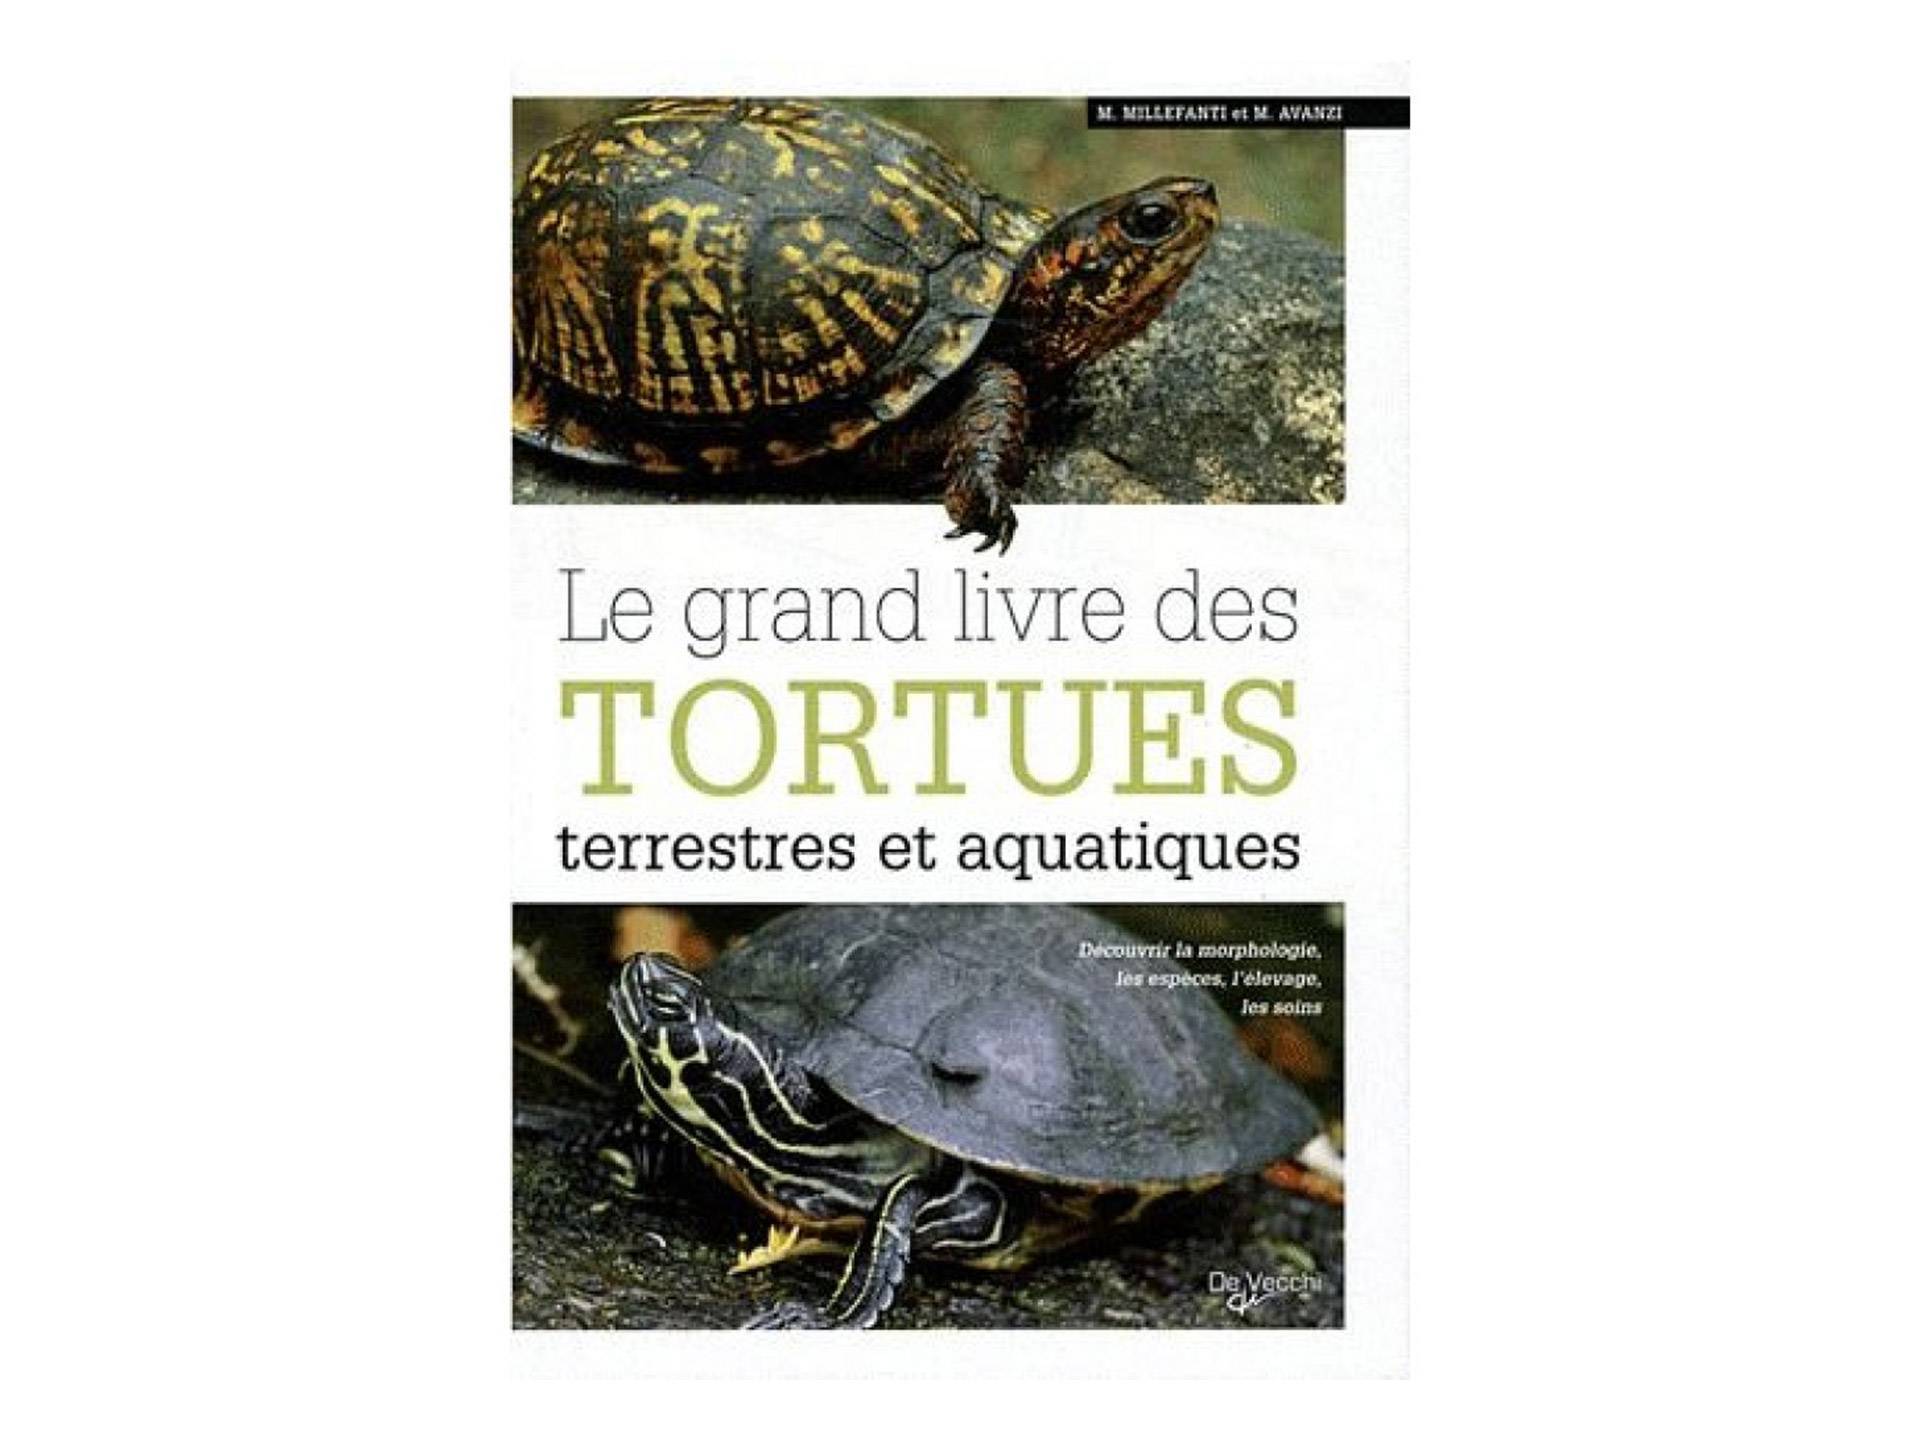 Le grand livre des tortues terrestres et aquatiques Massimo Millefanti septième